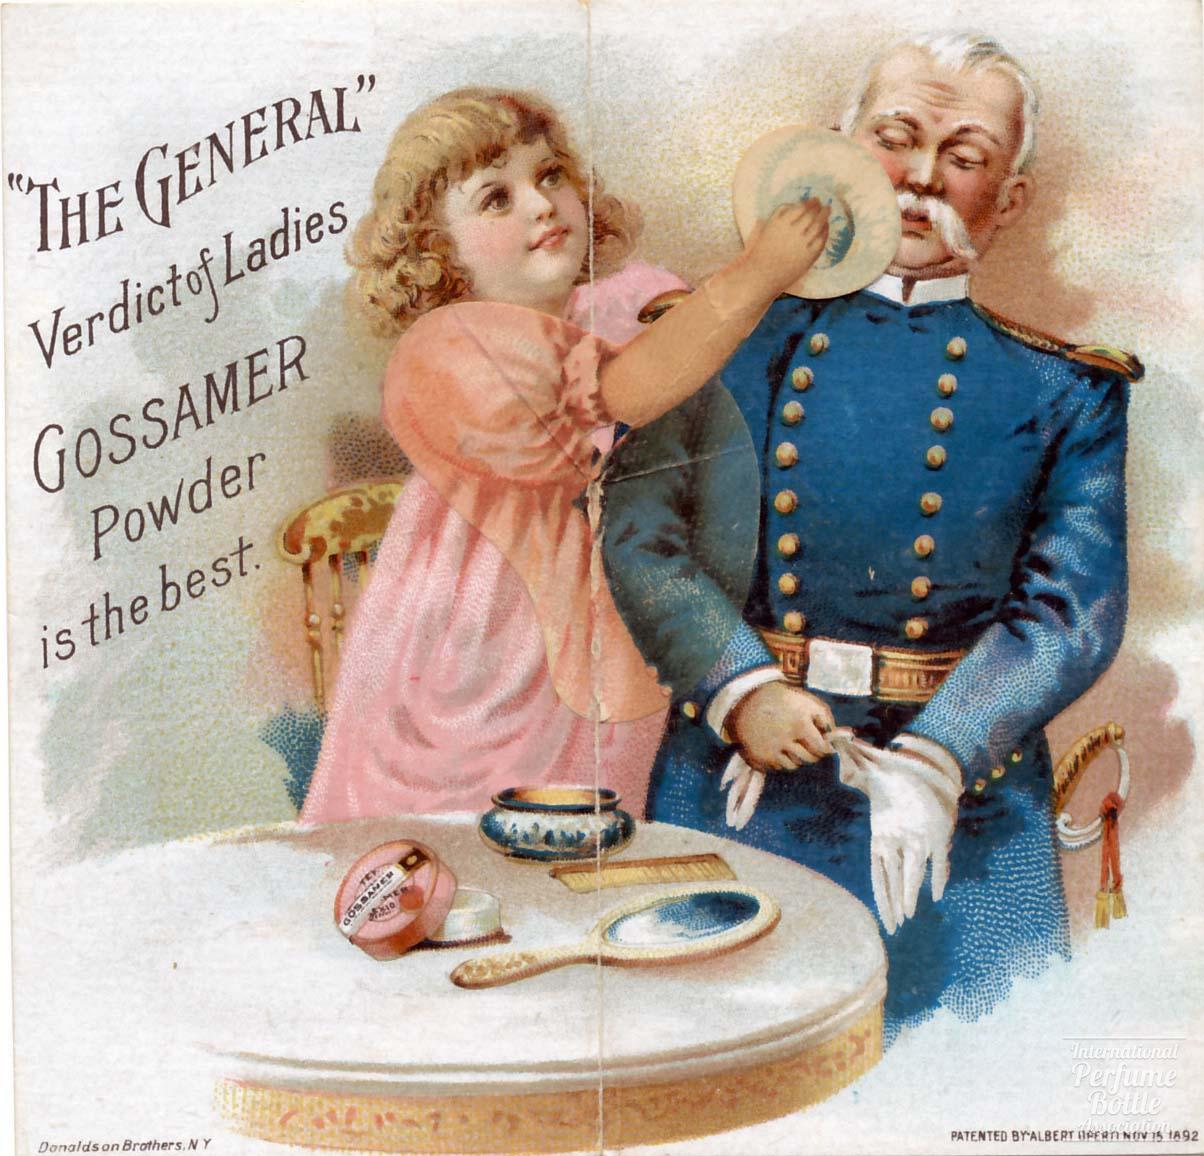 "Gossamer" Powder by Tetlow Trade Card